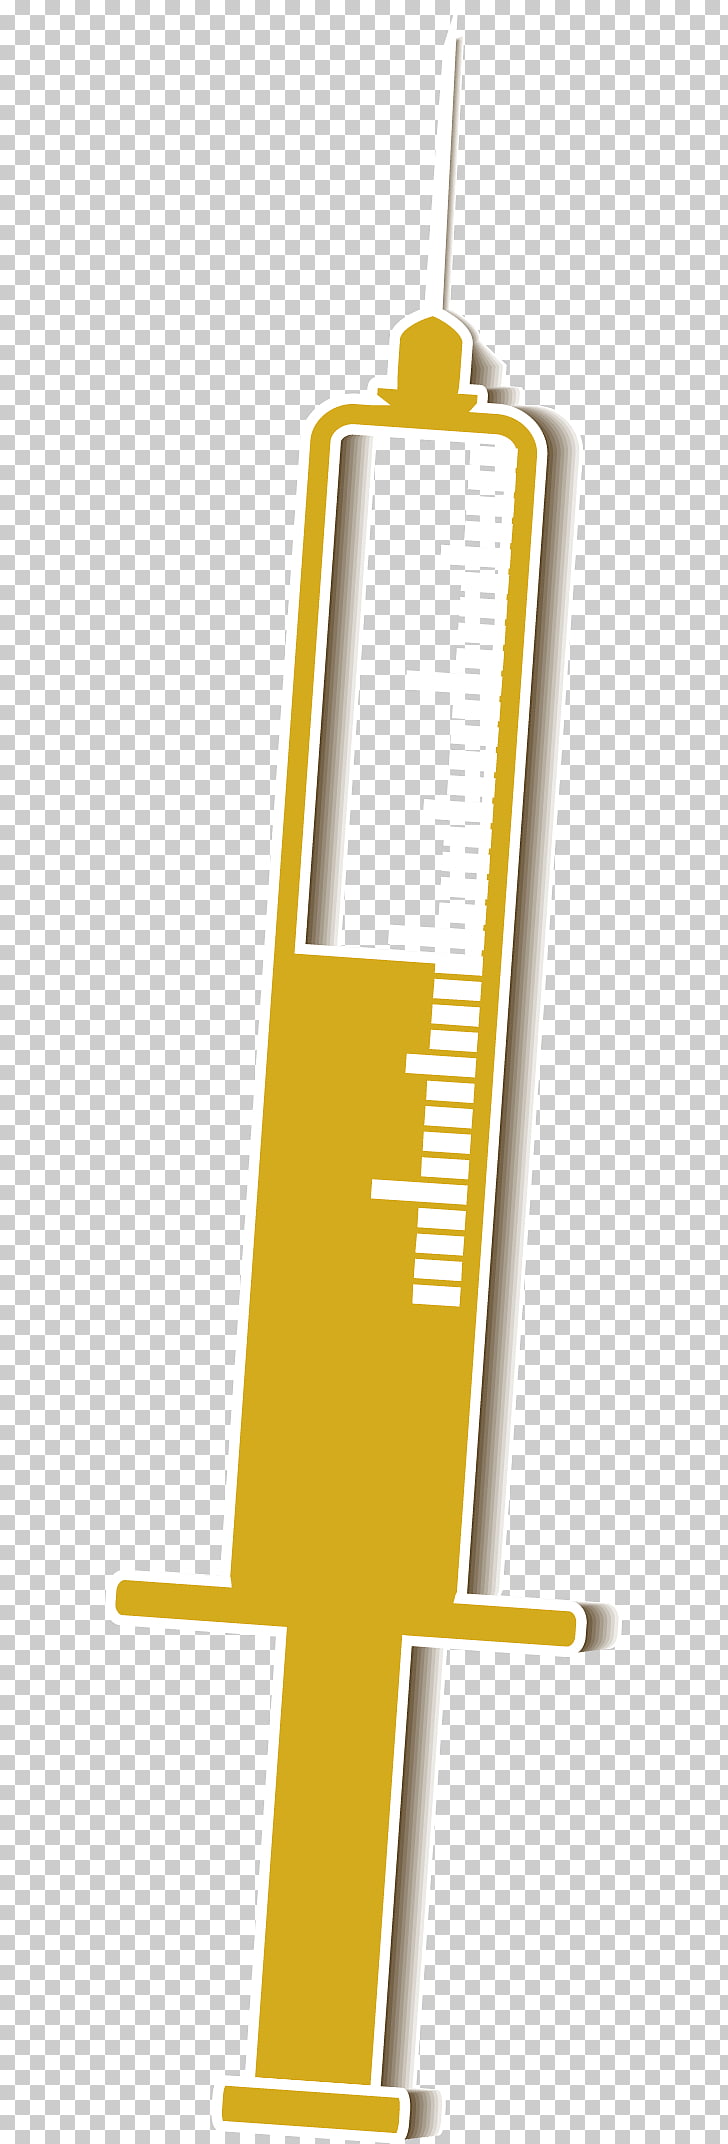 Syringe Yellow Graphic design Hypodermic needle Injection